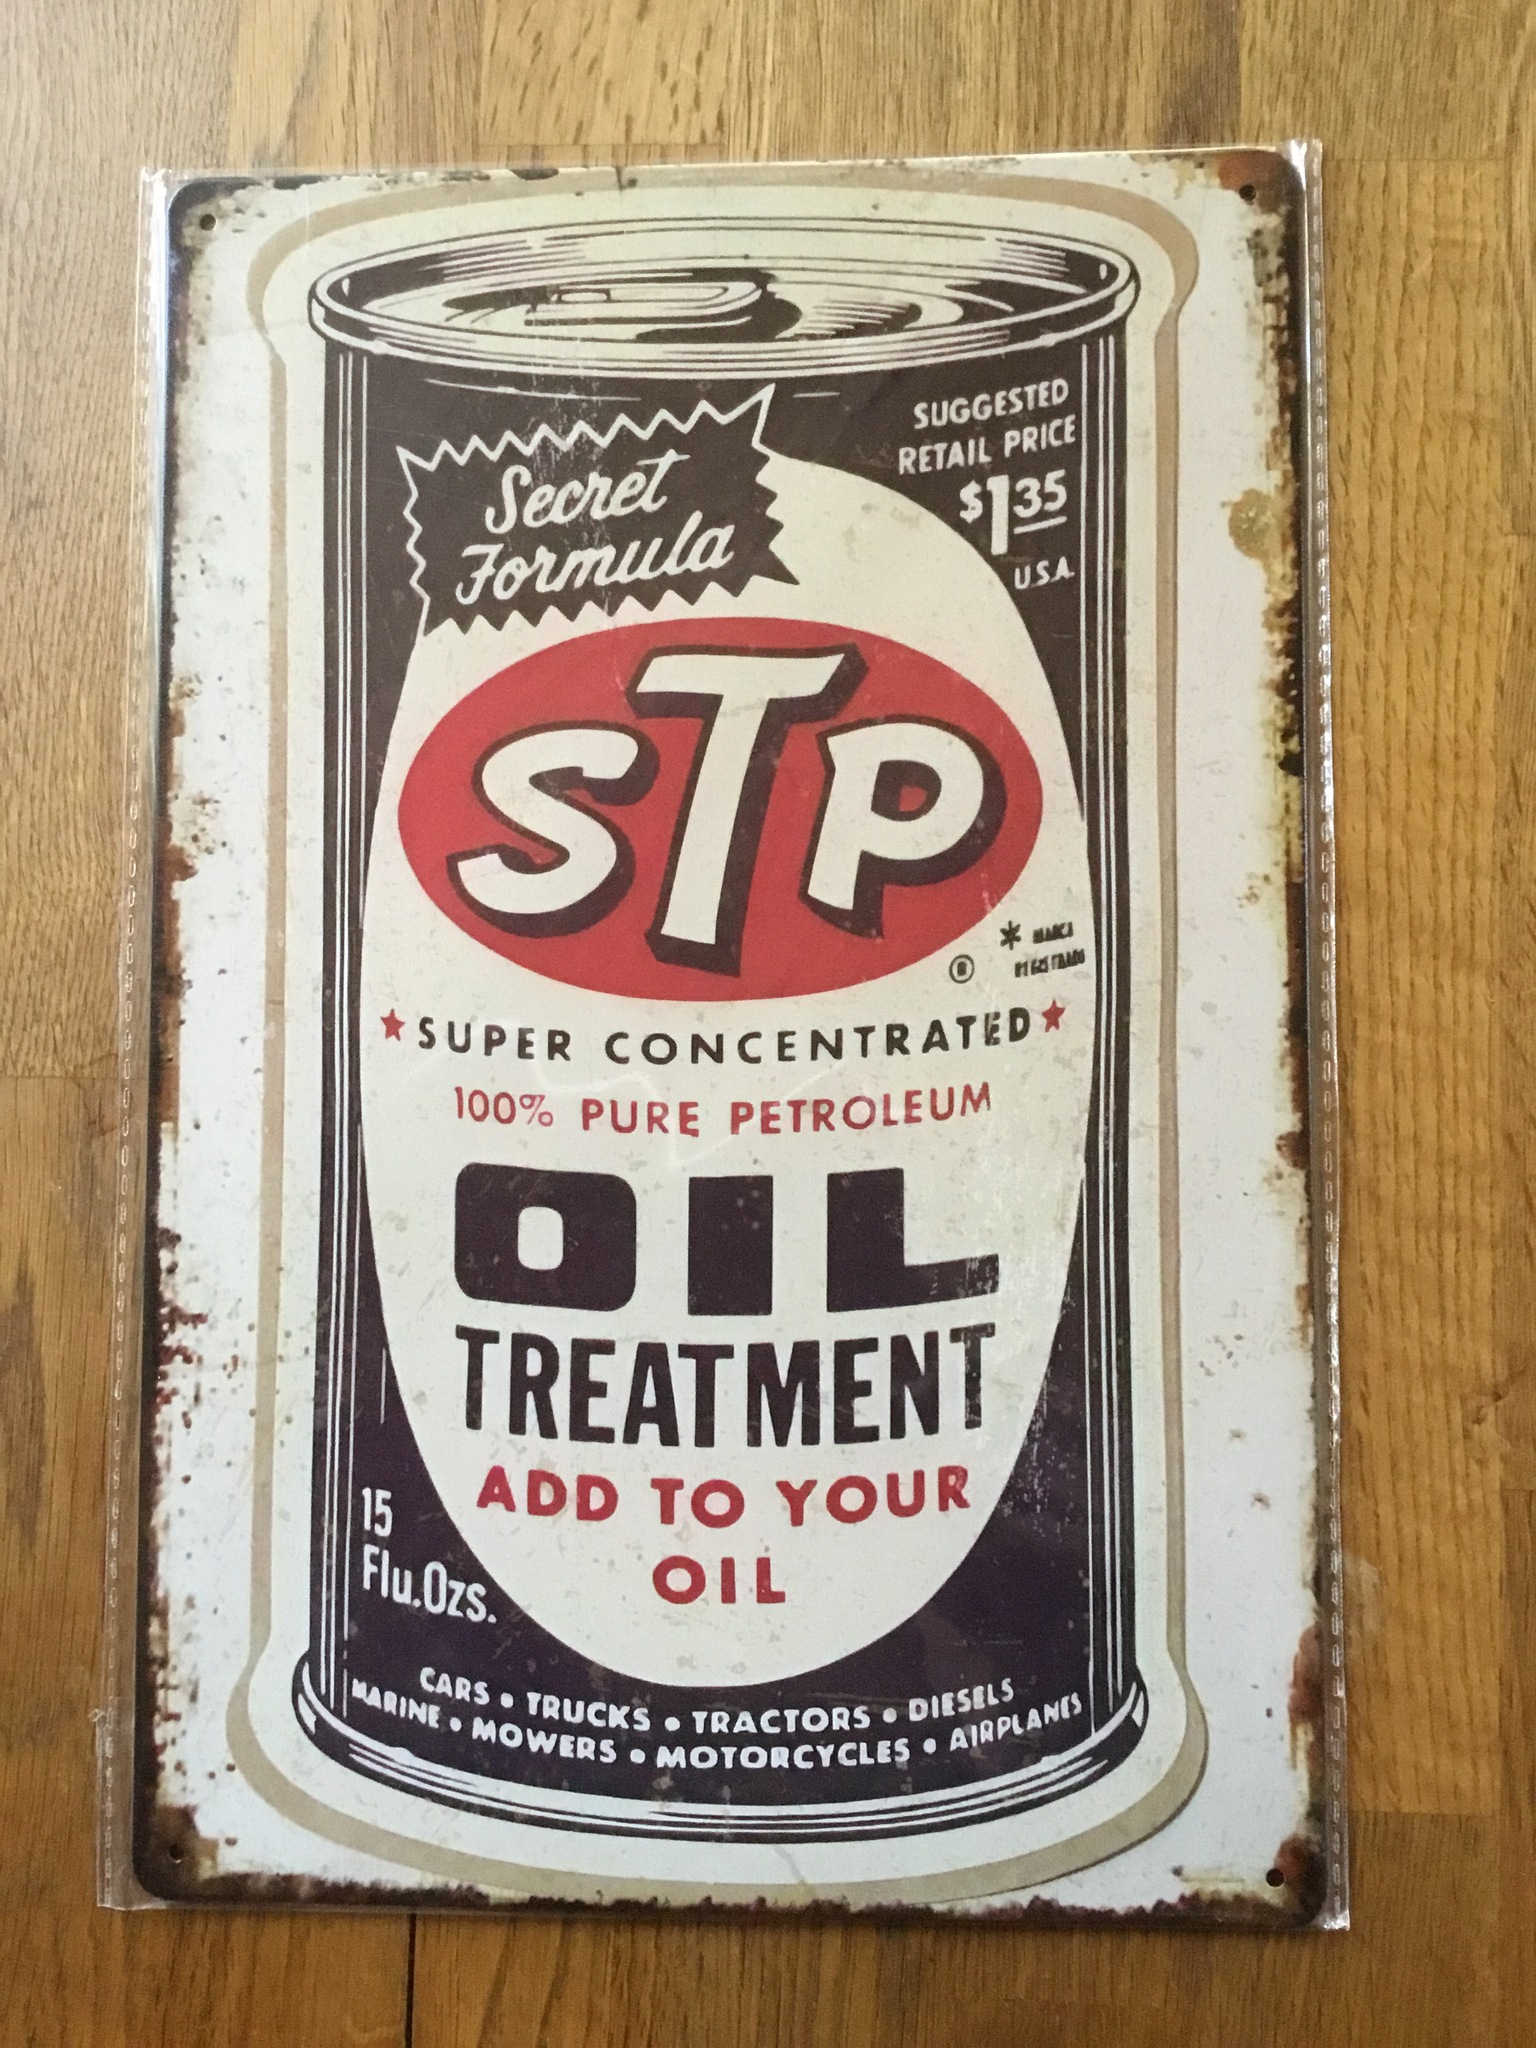 Stp oil treatment